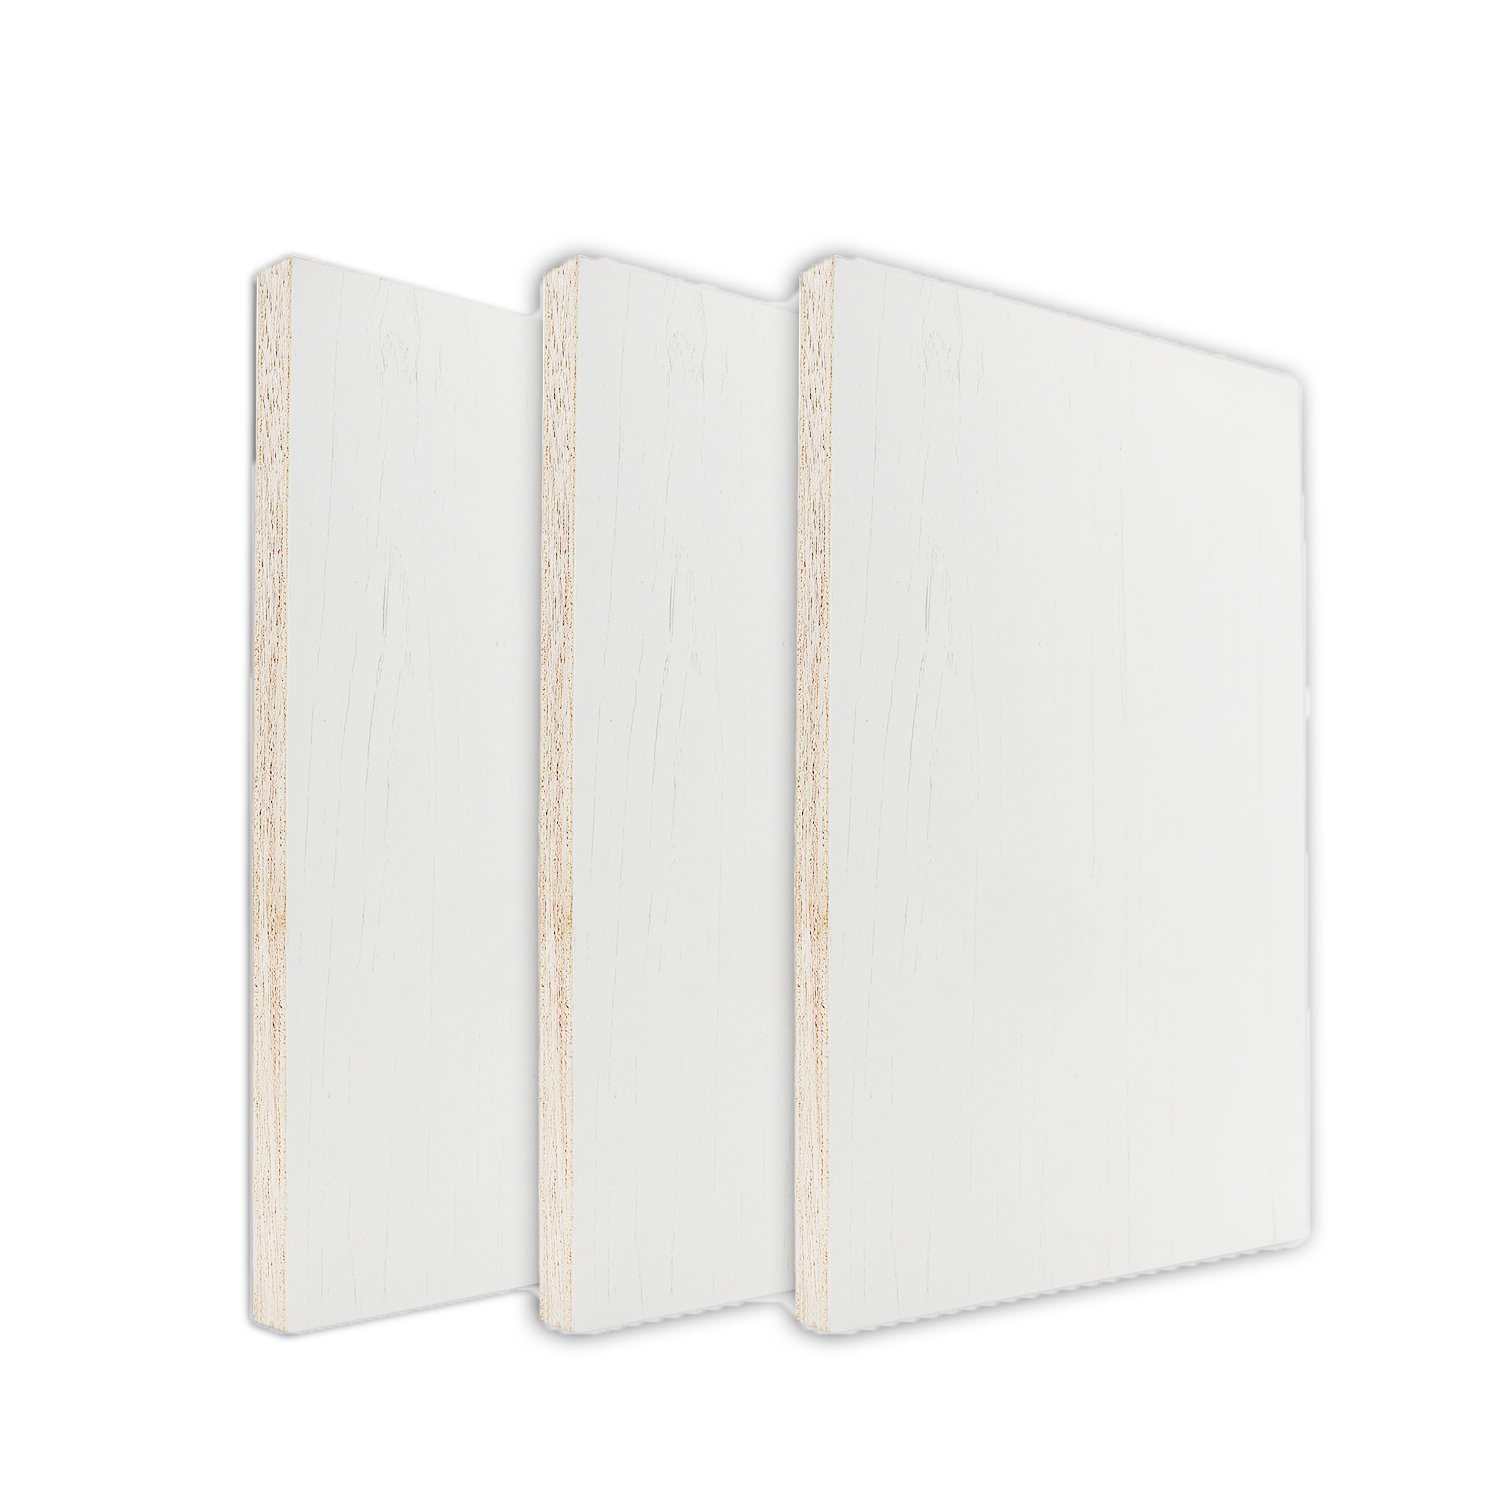 White Woodgrain Melamine Coated Plywood Board for Home Decoration